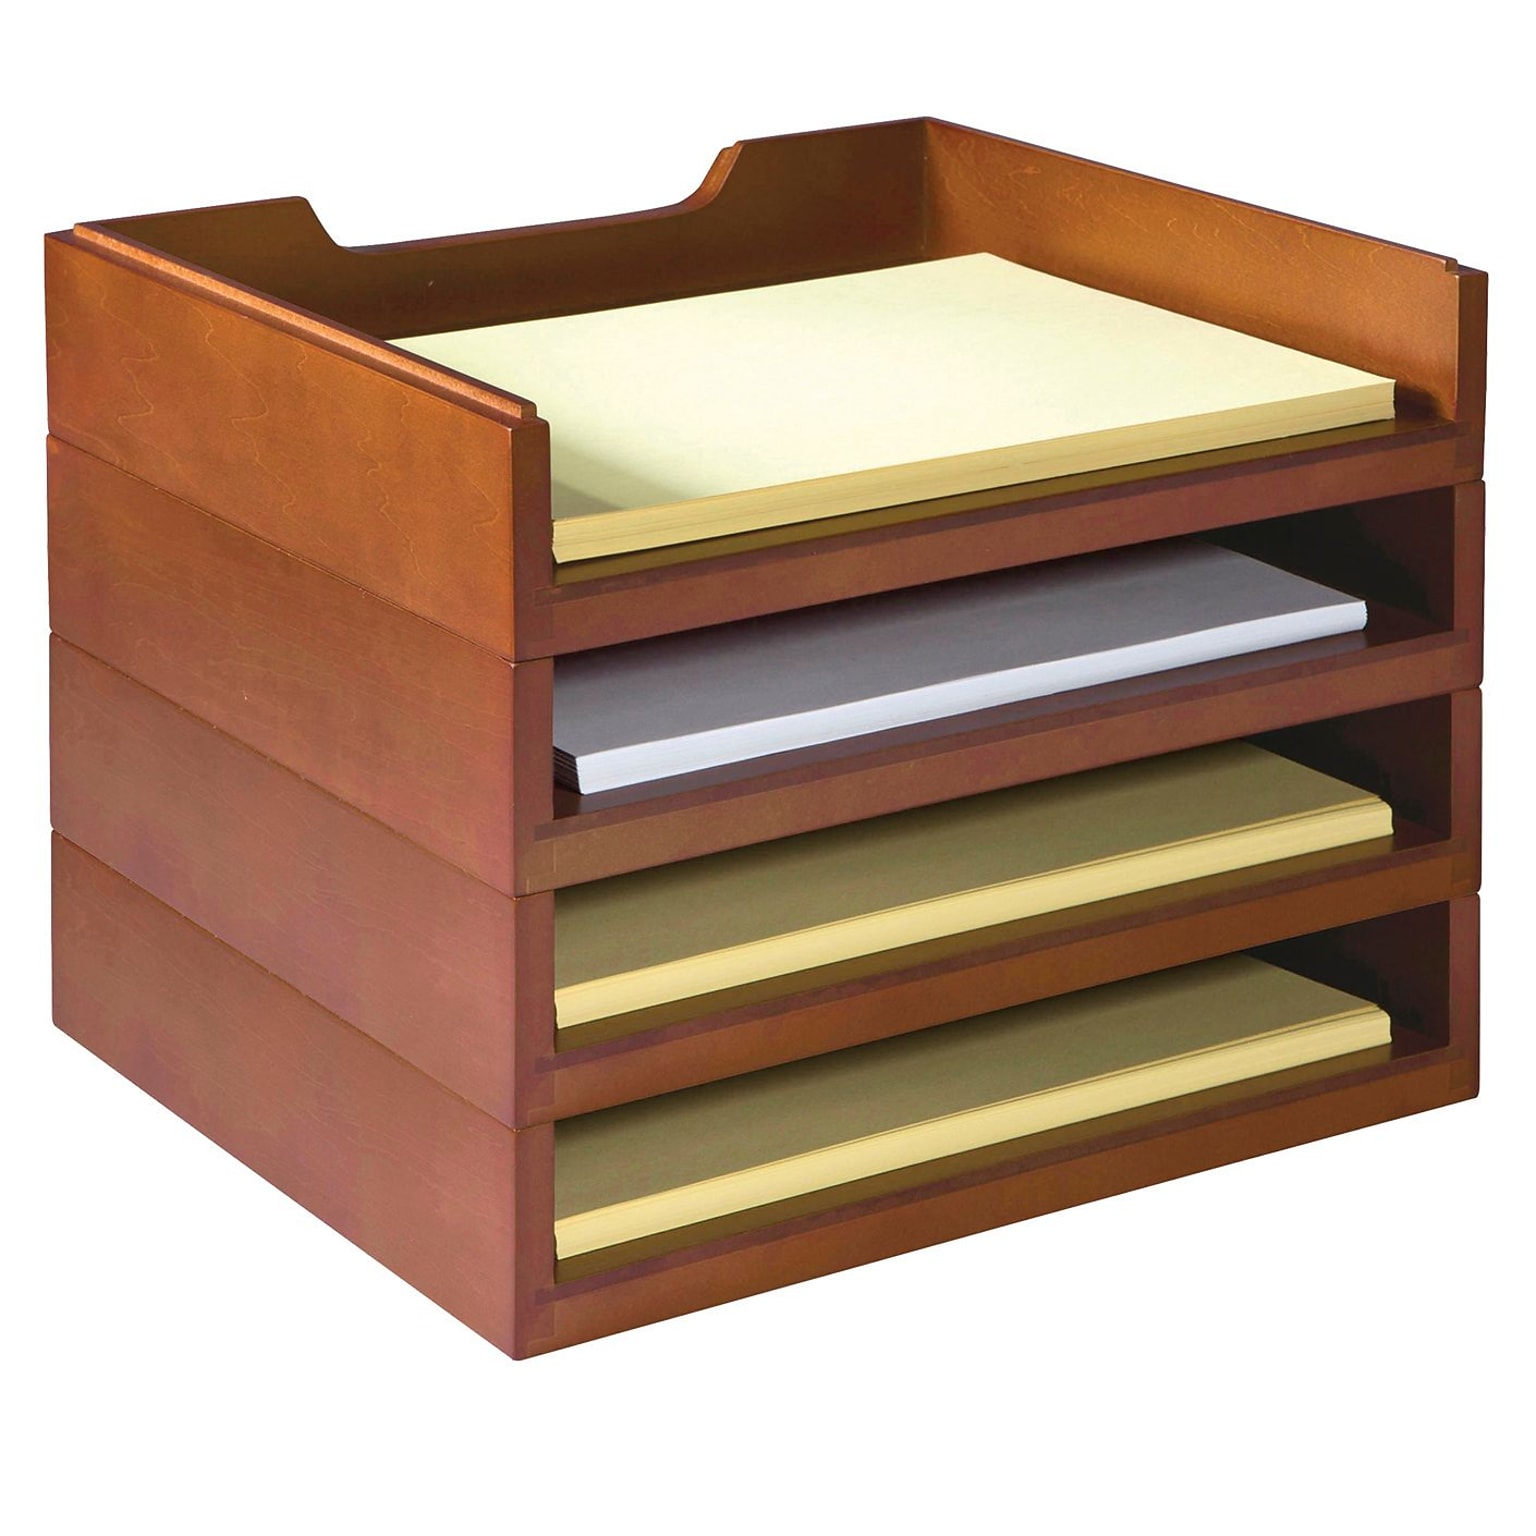 Bindertek Stackable Wood Desk Organizers, 4 Letter Tray Kit, Cherry (WK6-CH)